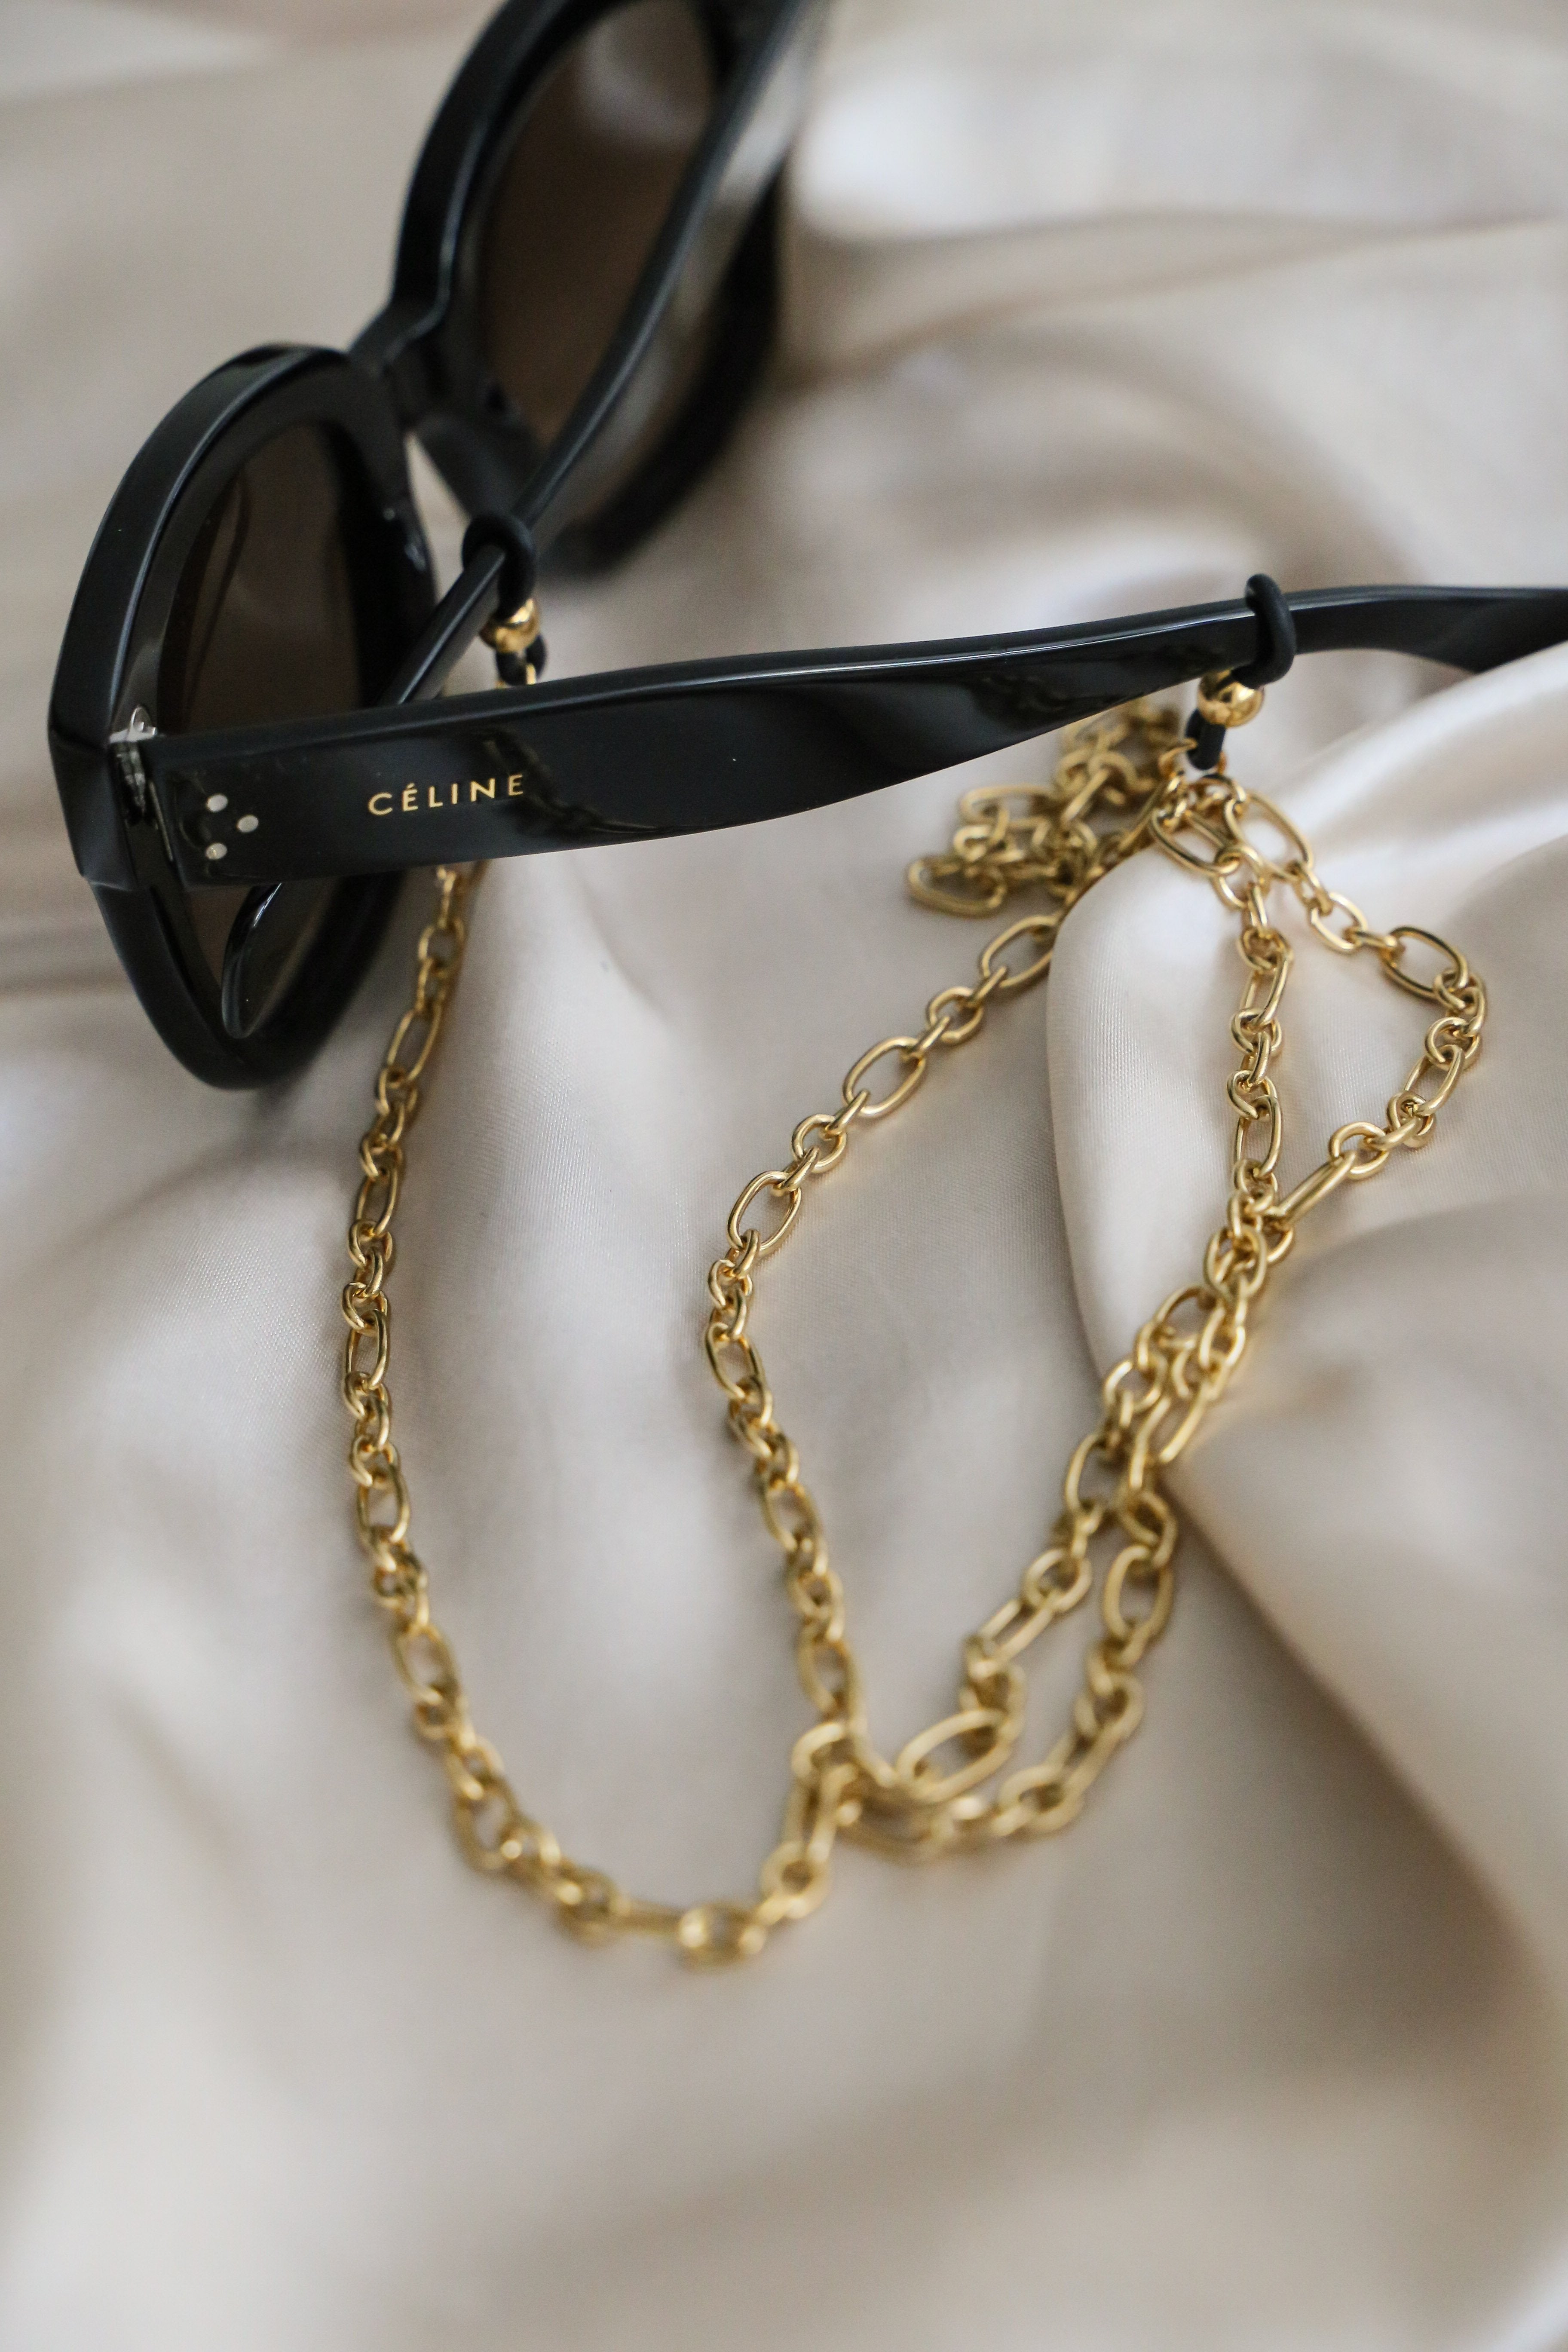 Costa Smeralda Sunglasses Chain - Boutique Minimaliste has waterproof, durable, elegant and vintage inspired jewelry